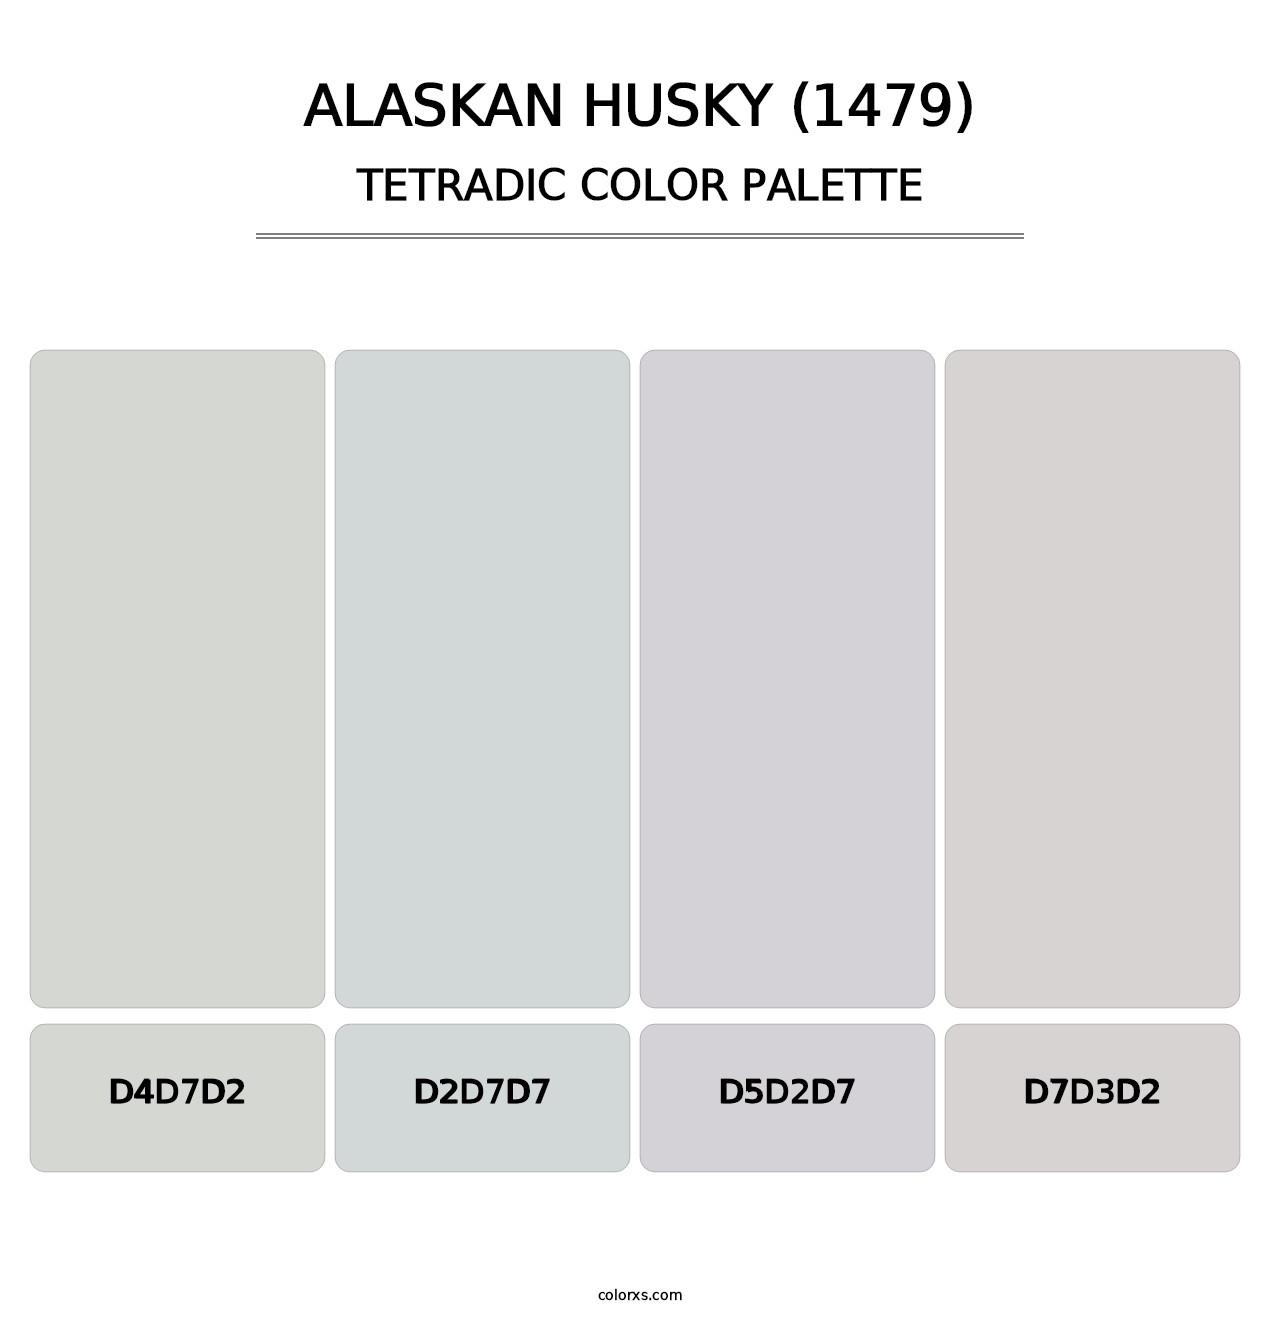 Alaskan Husky (1479) - Tetradic Color Palette